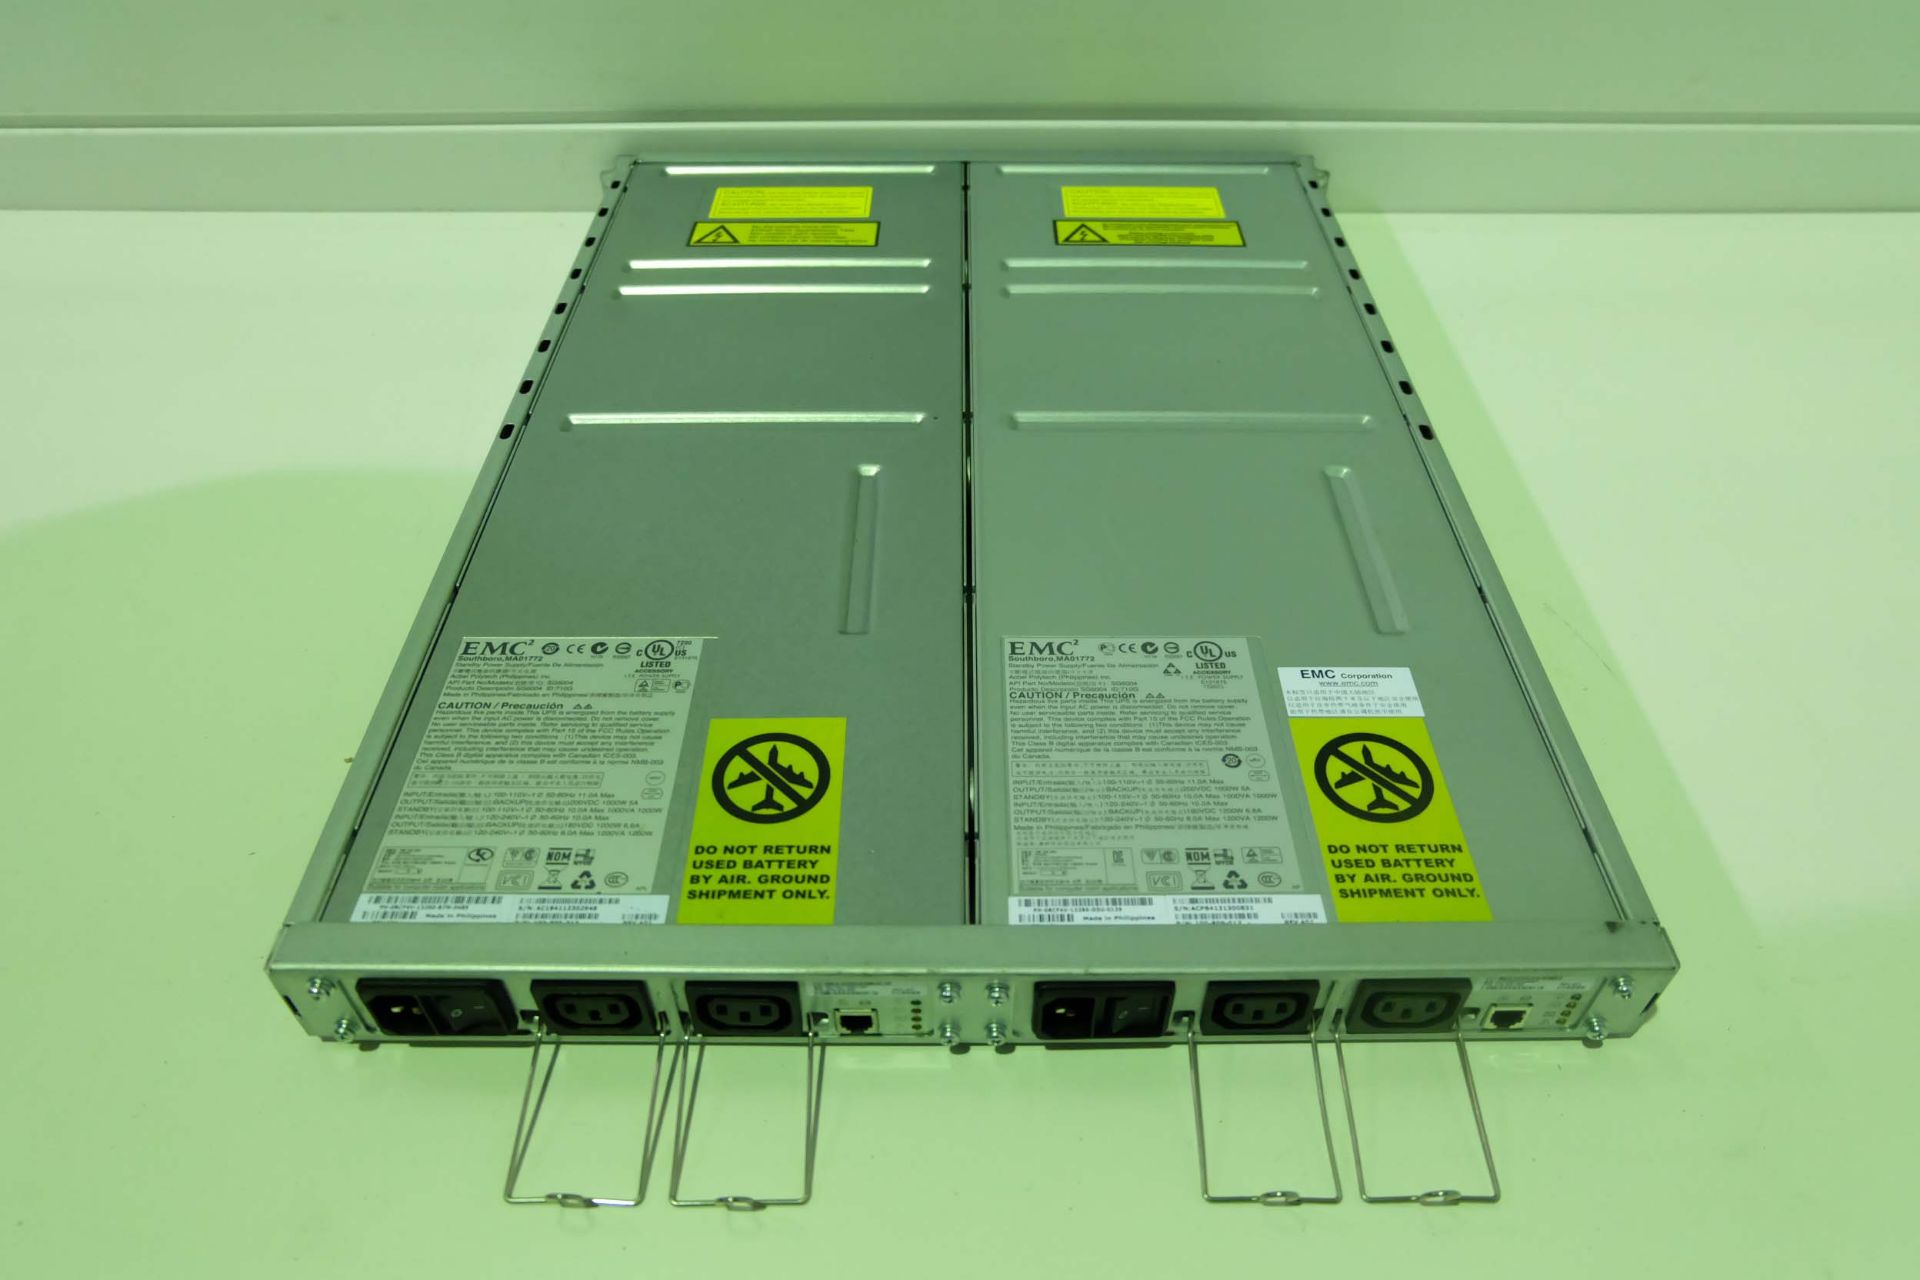 2 x EMC Model SG6004 Standby Power Supply Units. Maximum Output 1200 Watt Each. - Image 2 of 7